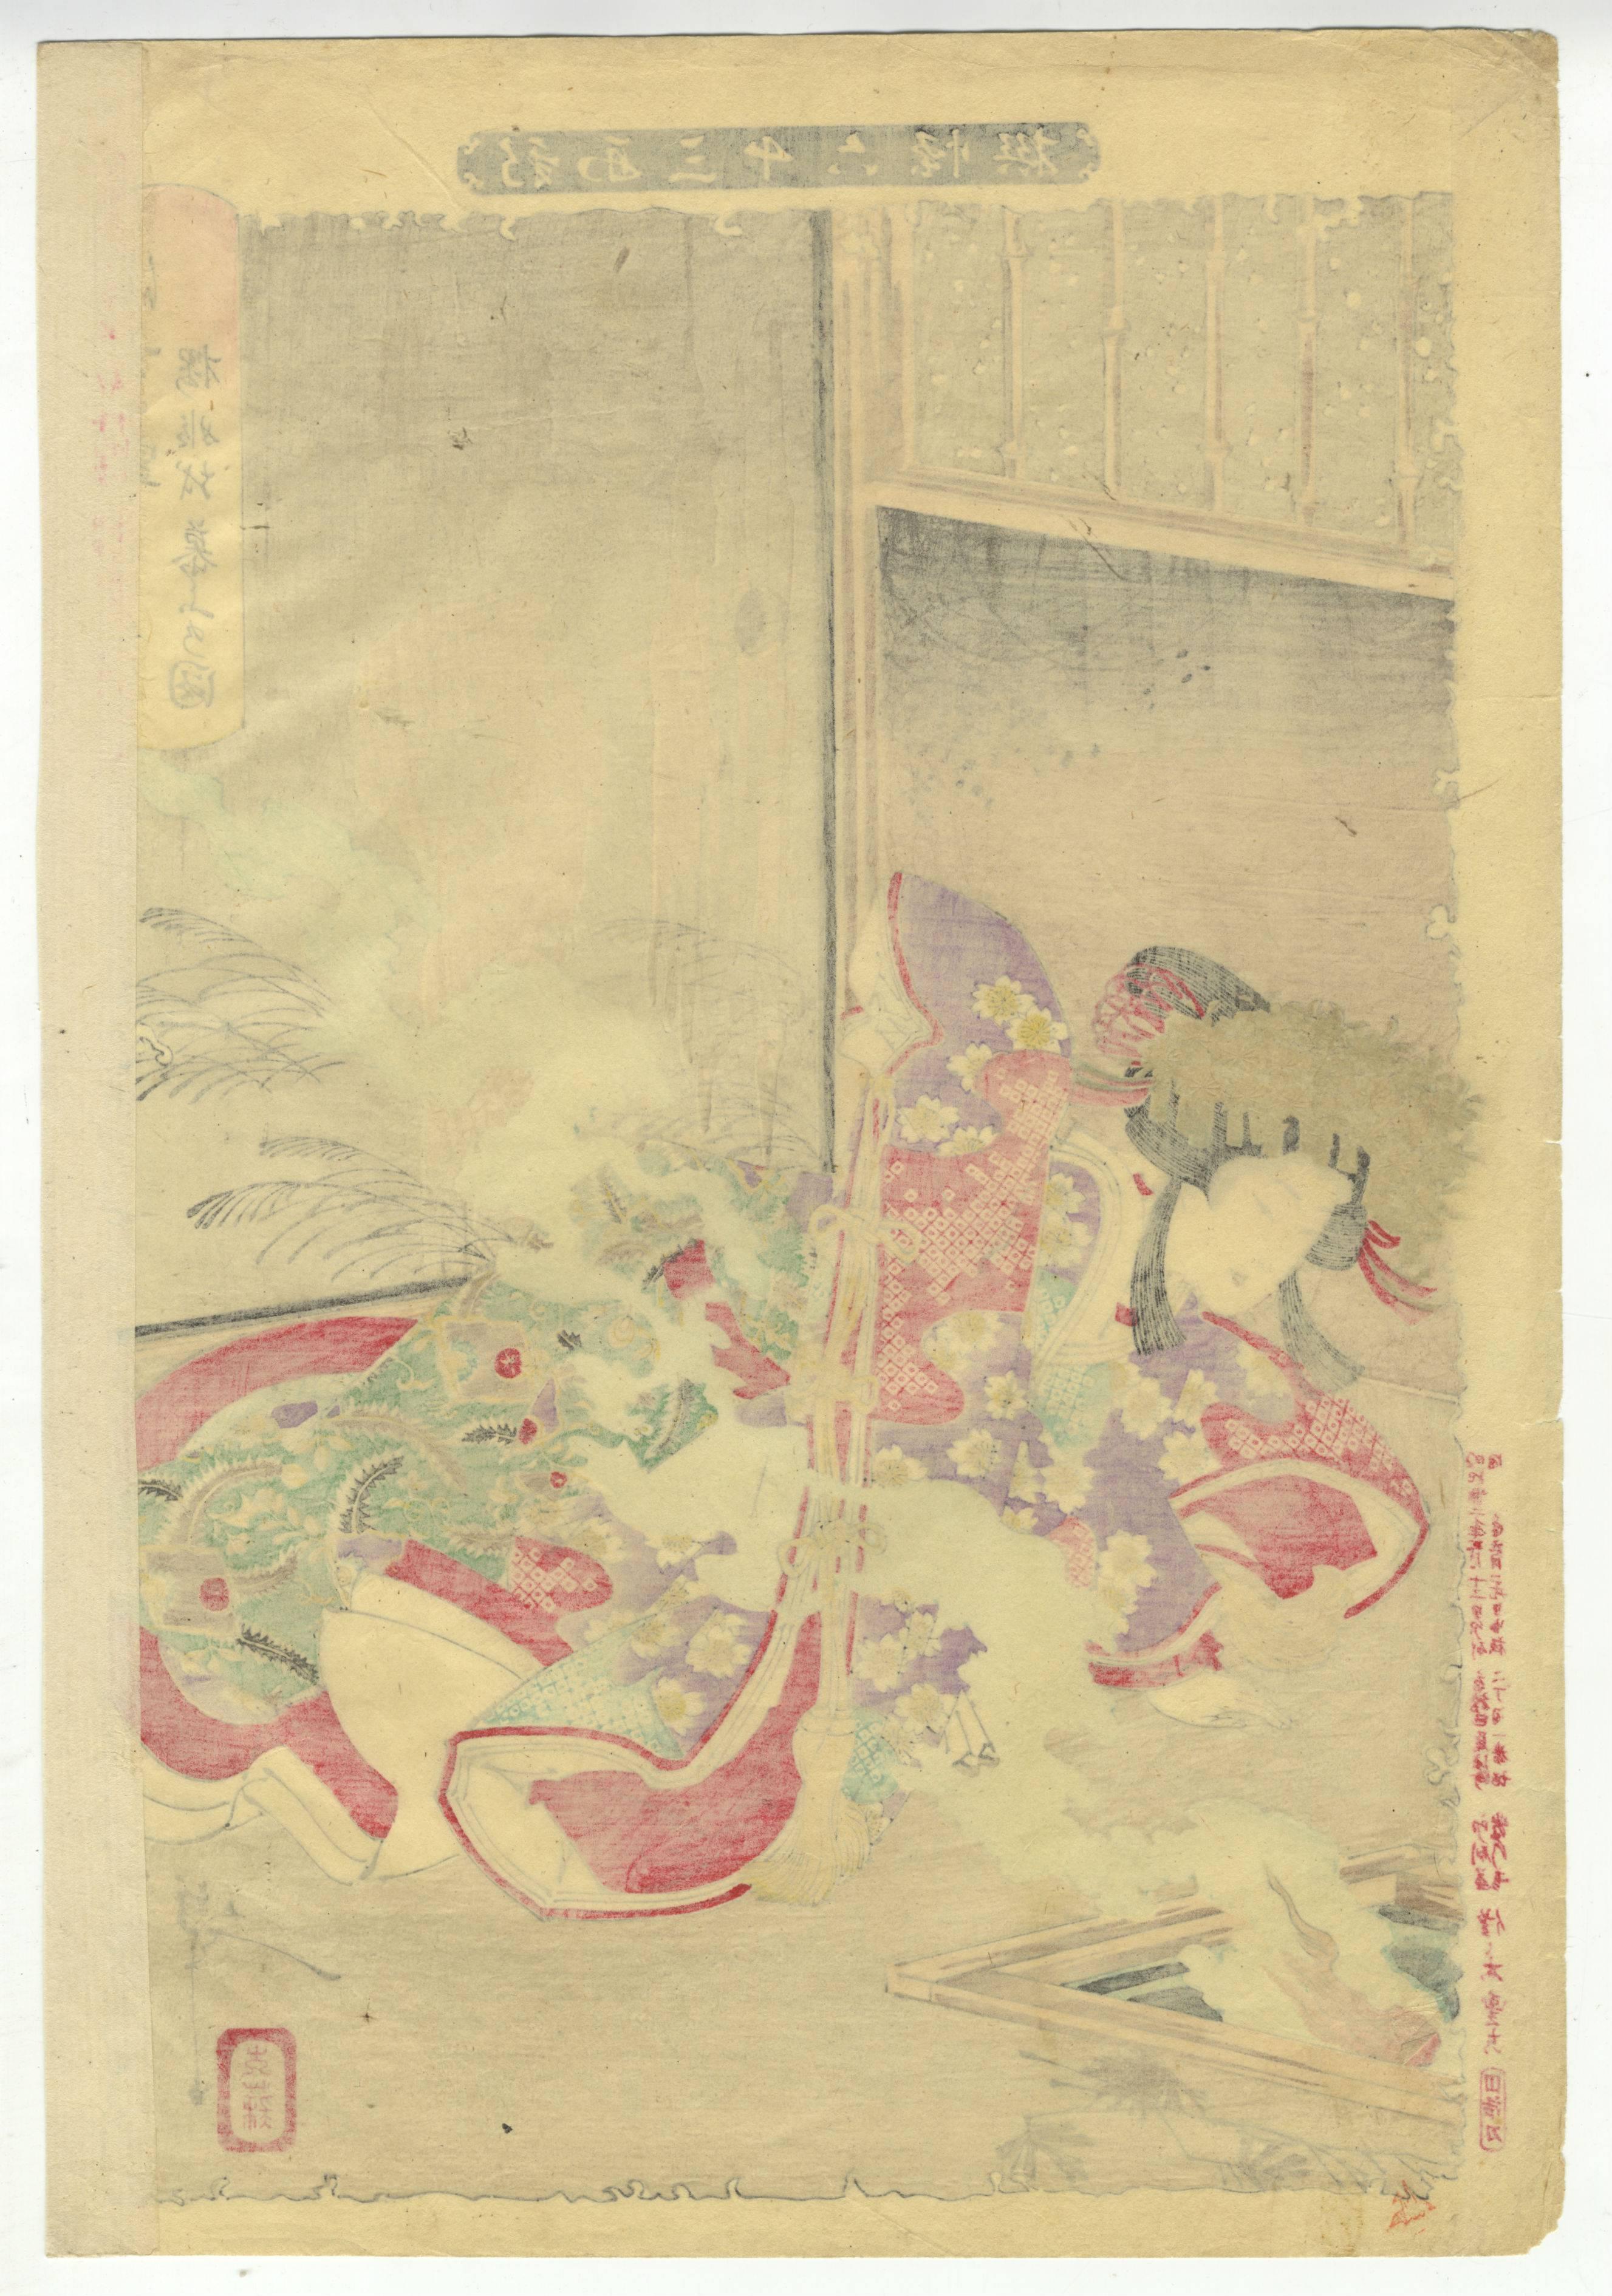 Hand-printed on Japanese washi paper.

Title: The Ghost of Seigen Haunting Sakurahime
Artist: Yoshitoshi Tsukioka (1839 - 1892)
Publisher: Sasaki Toyokichi
Published in 1889.

Sakurahime, 'Cherry Princess', was a famous courtesan, the most beautiful